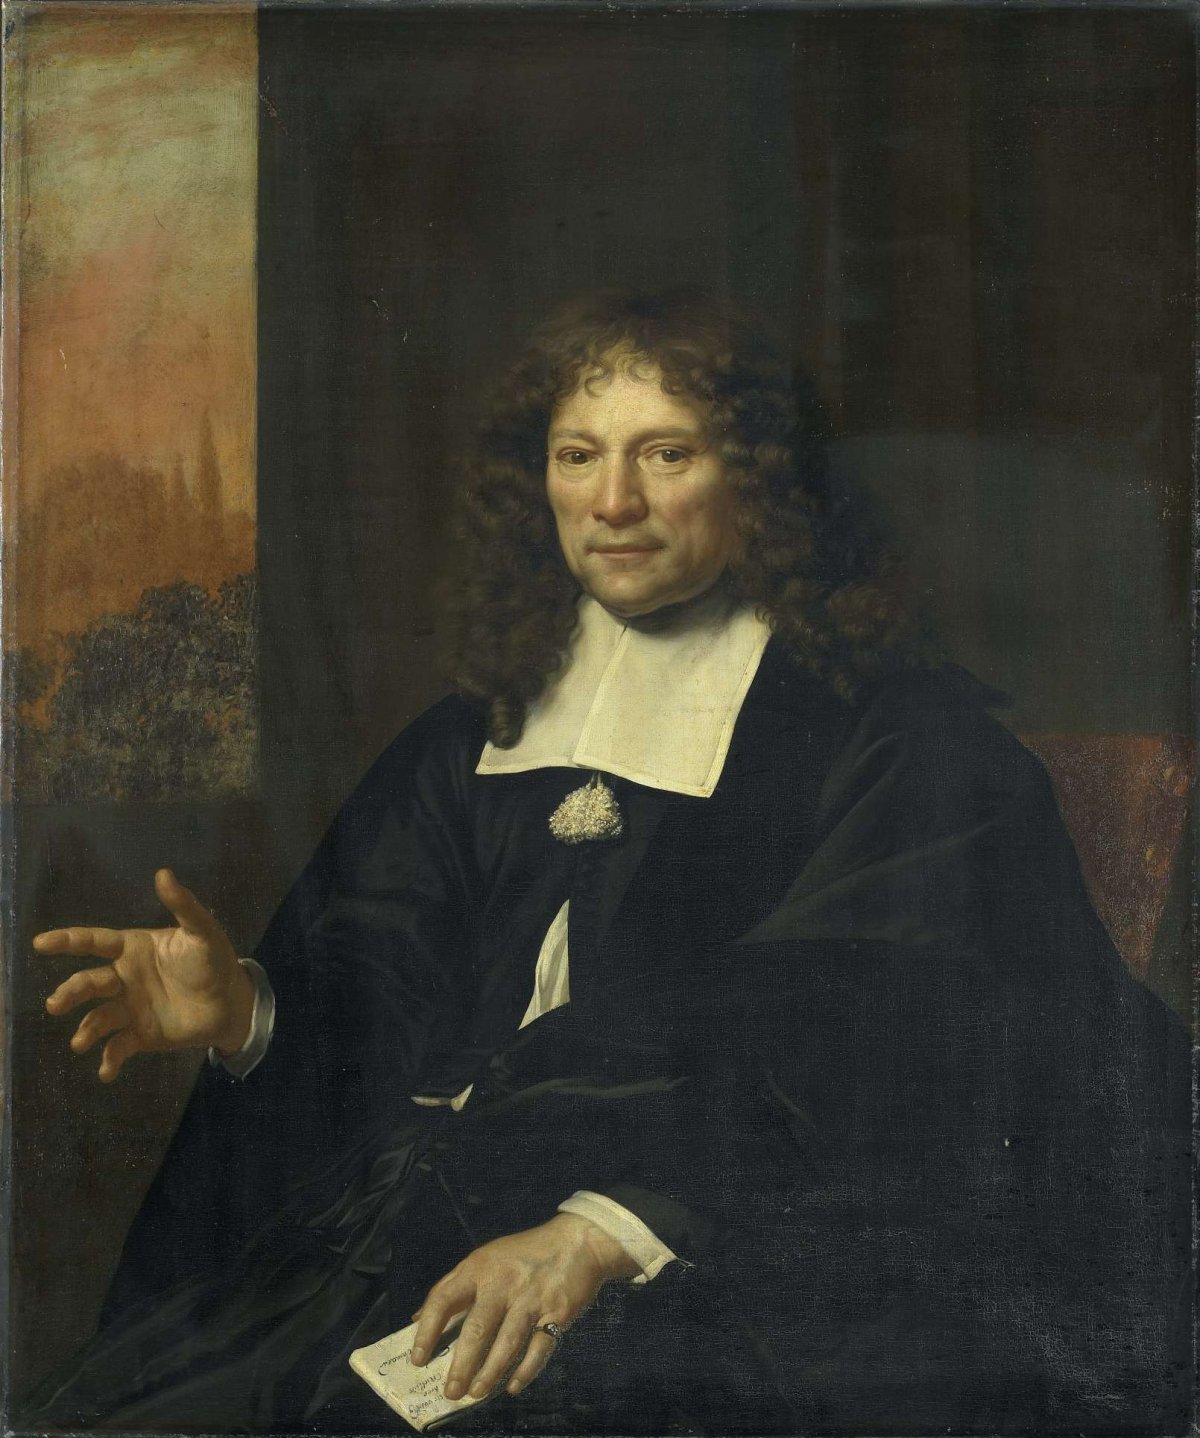 Portrait of Daniel Niellius. Elder of the Remonstrant Church and Sampling Official of Alkmaar, Adriaen Backer, 1671